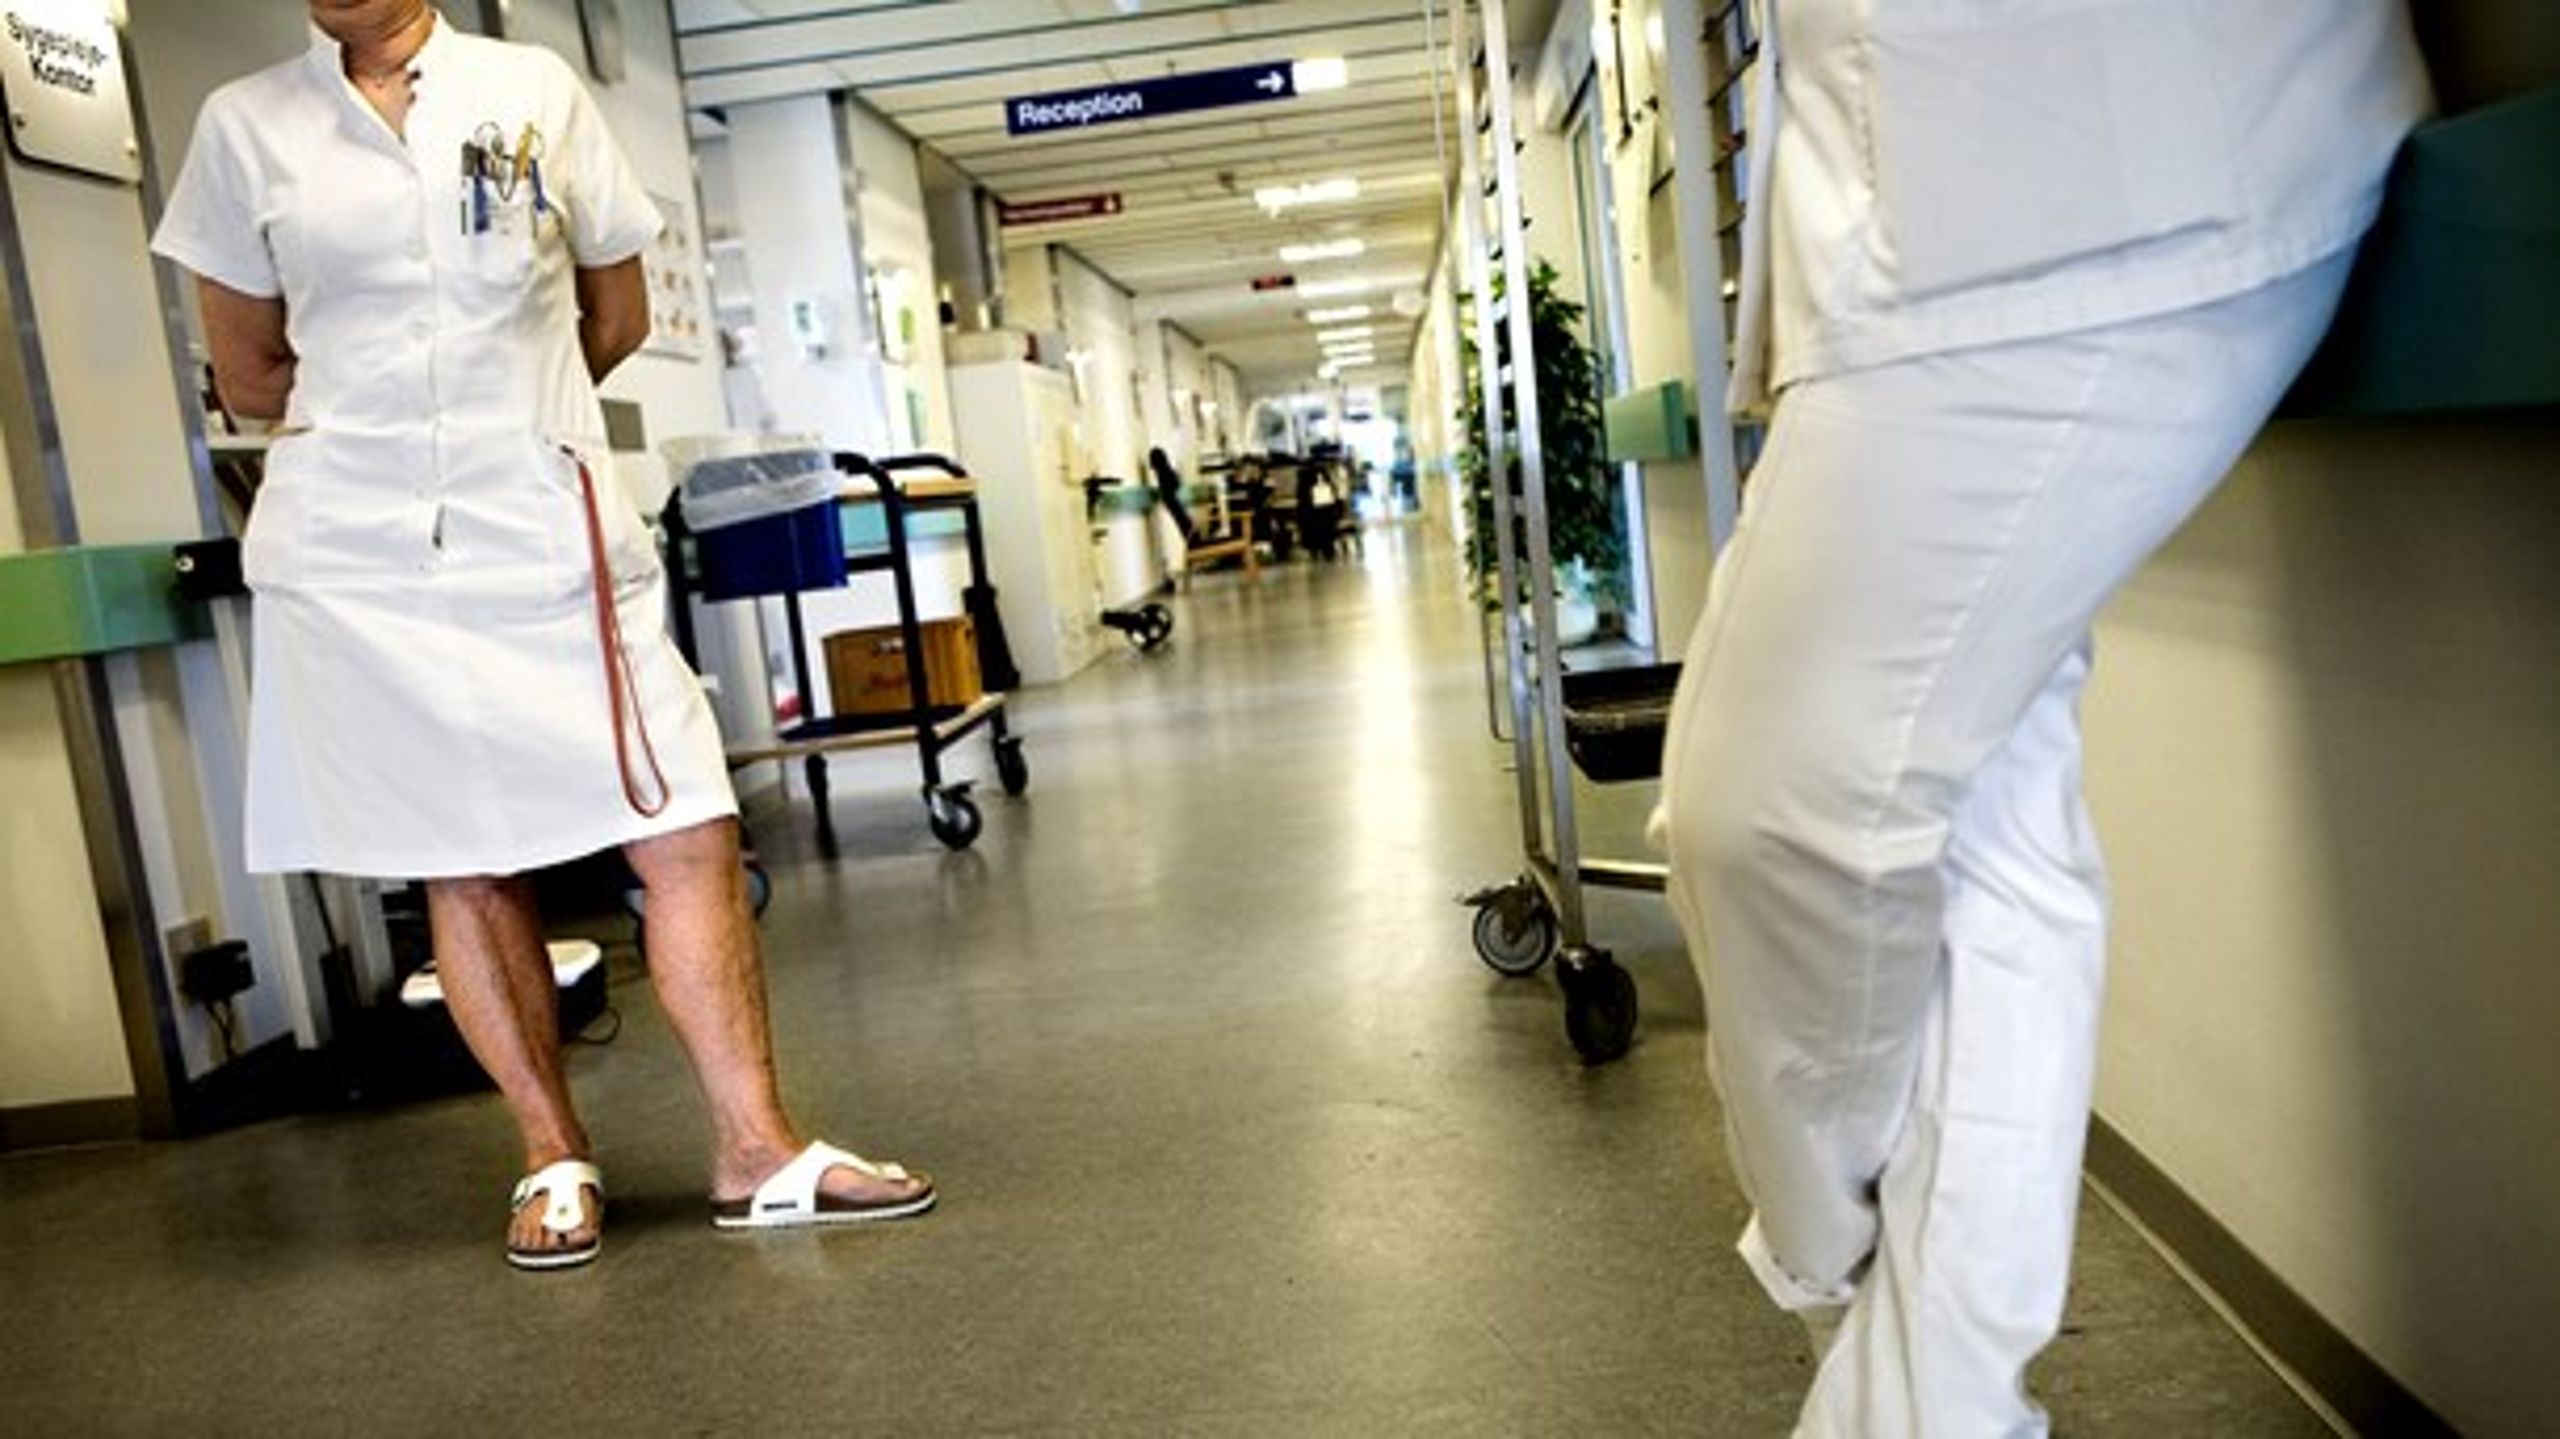 Det er åbenlyst uholdbart, hvis alle patienter får det samme tilbud om rehabilitering, mener Danske Patienter.